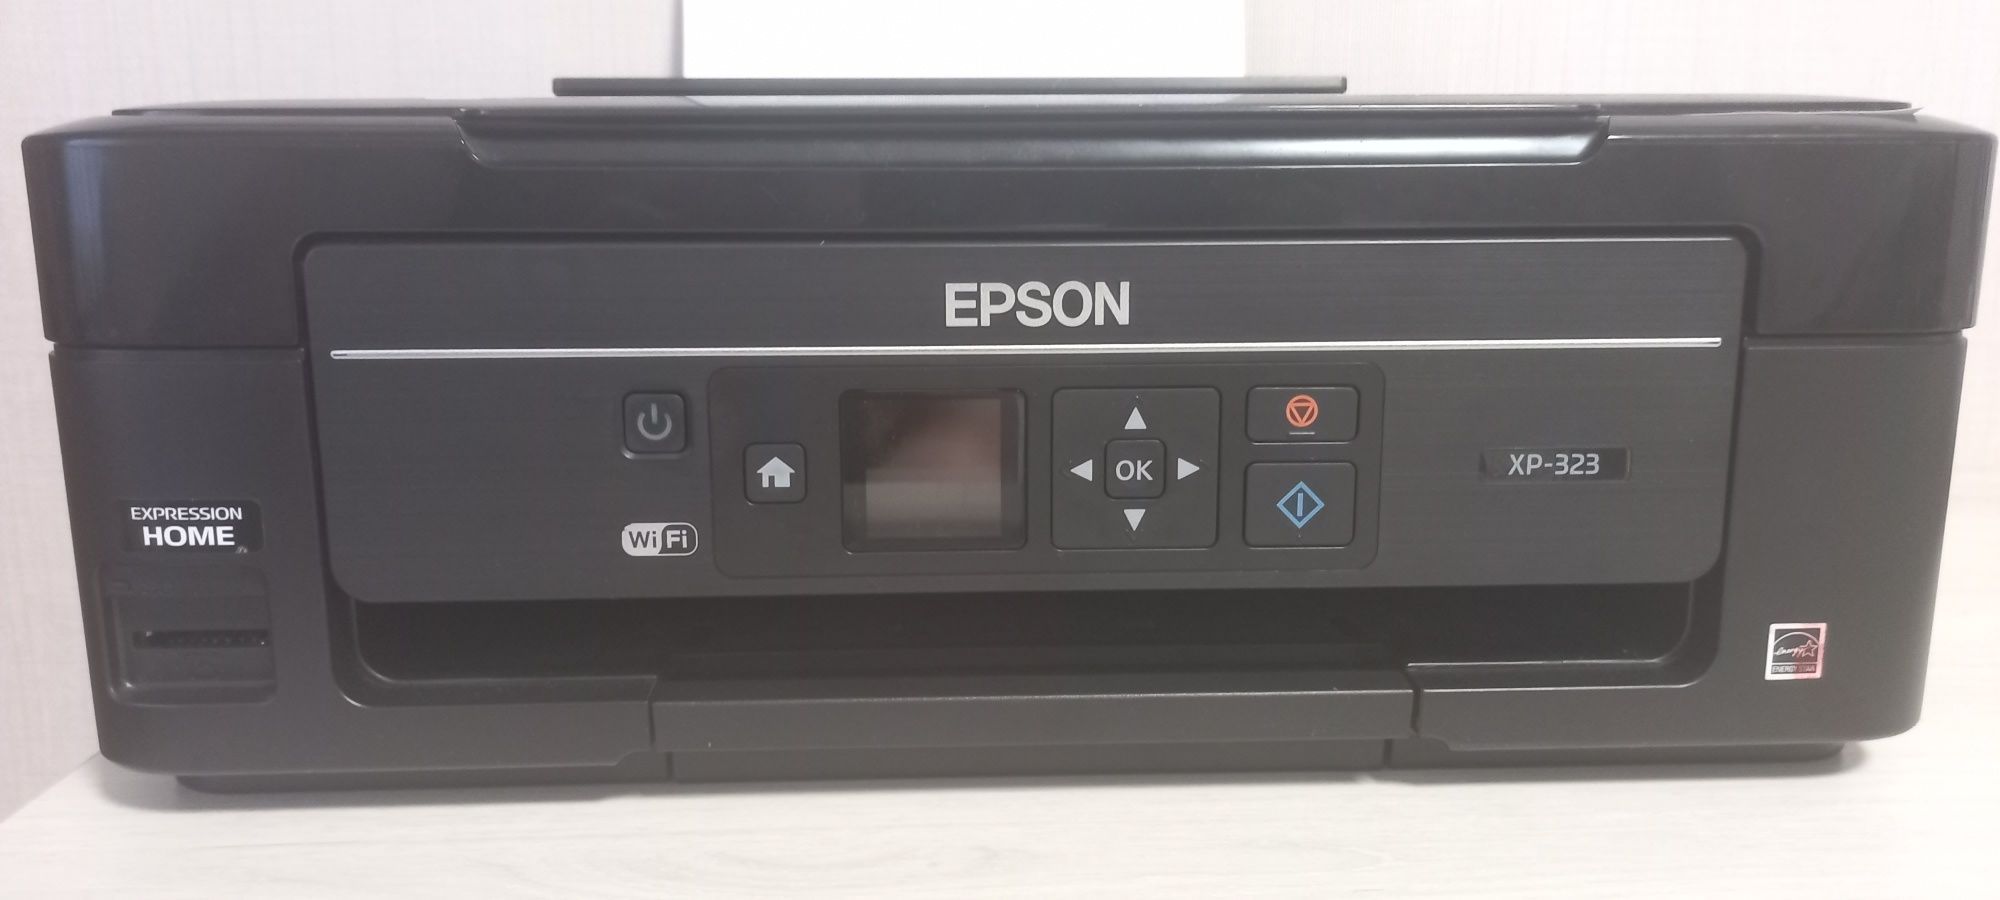 Принтер Epson 323